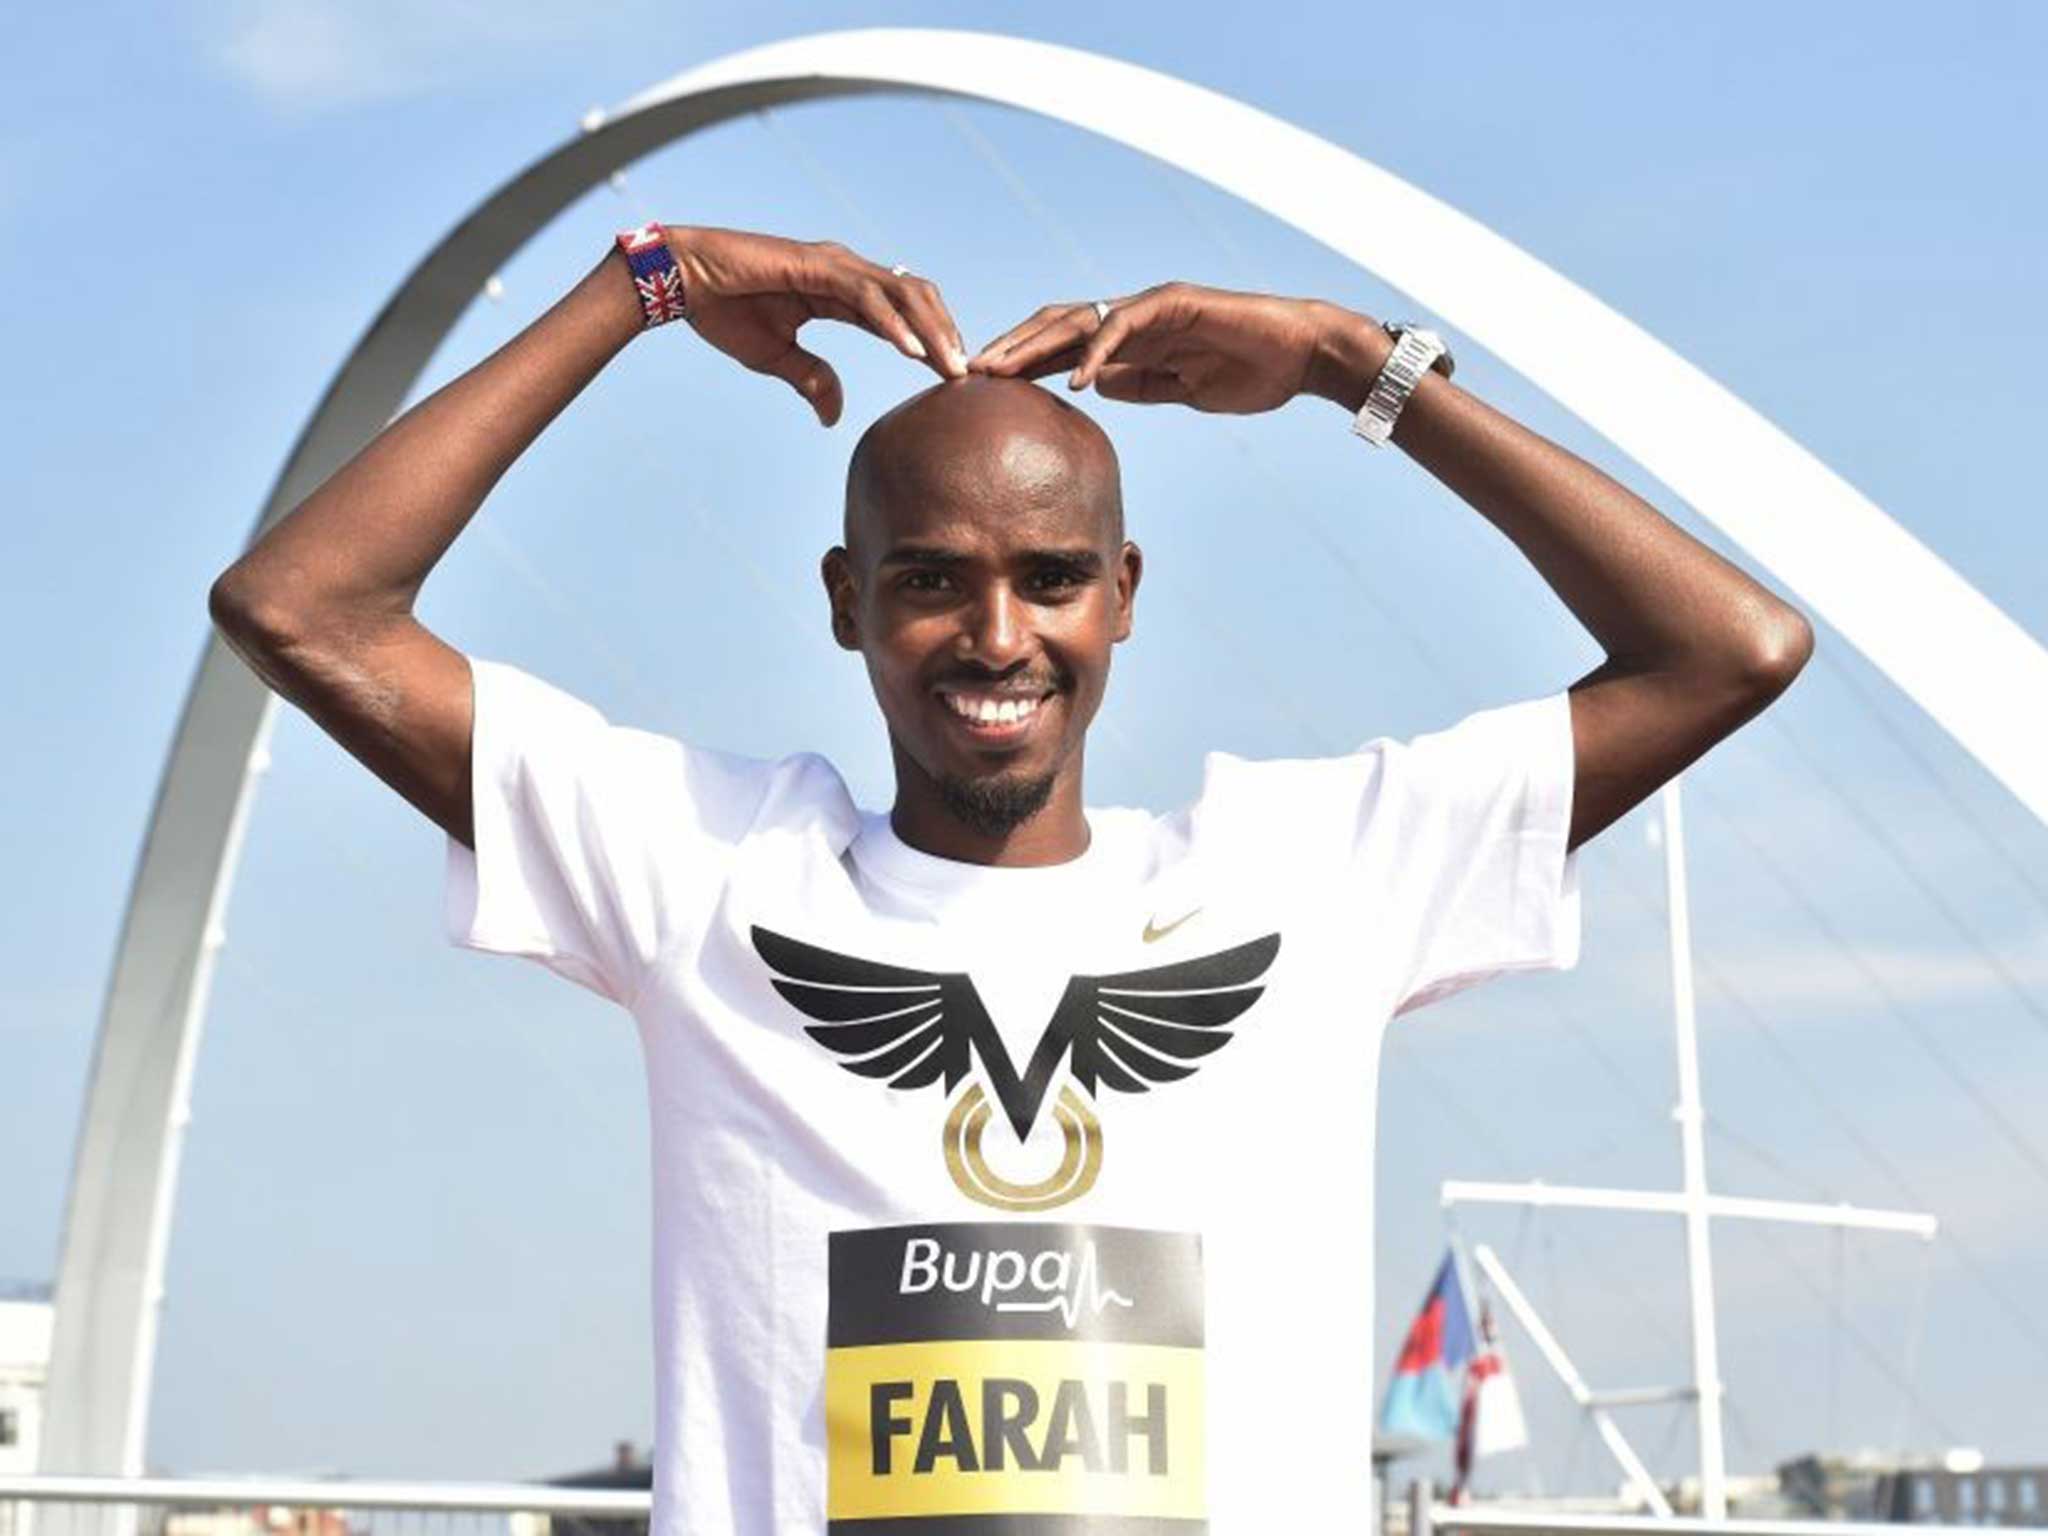 Twelve months ago Farah was beaten in a sprint finish by the Ethiopian Kenenisa Bekele